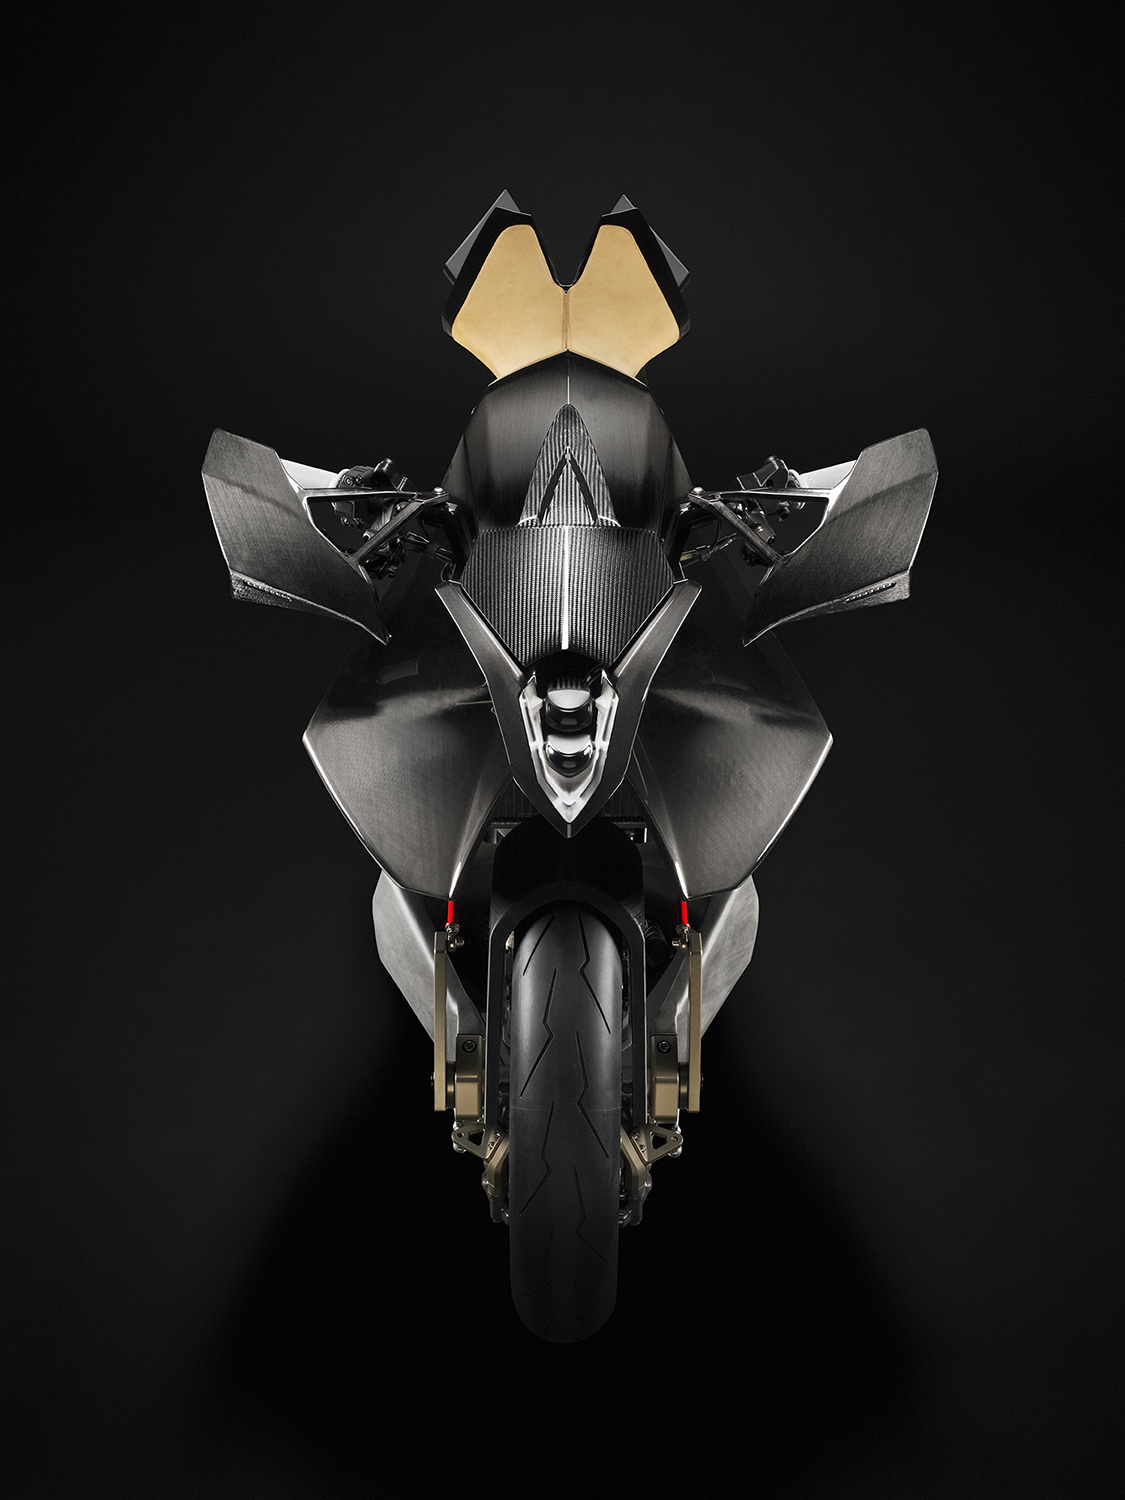 2020-vyrus-alyen-988-superbike-12.jpg